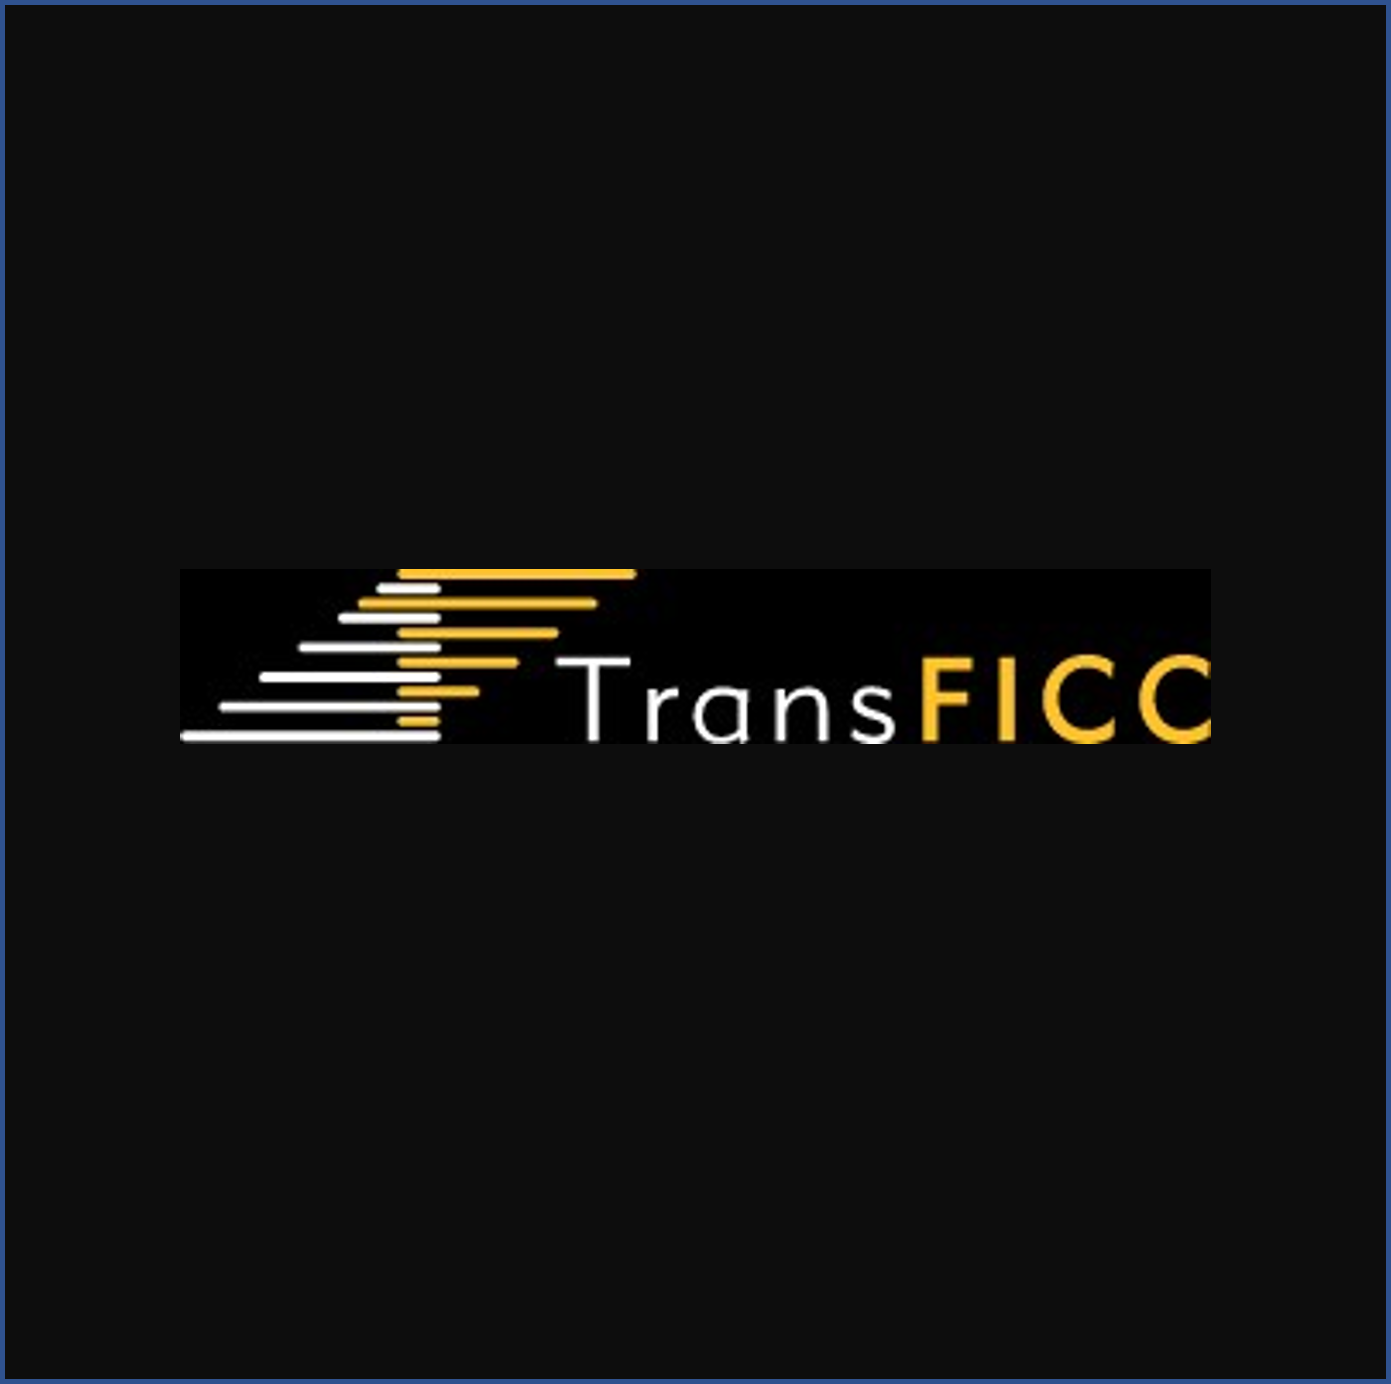 TransFICC Fast-growing London fintech company 